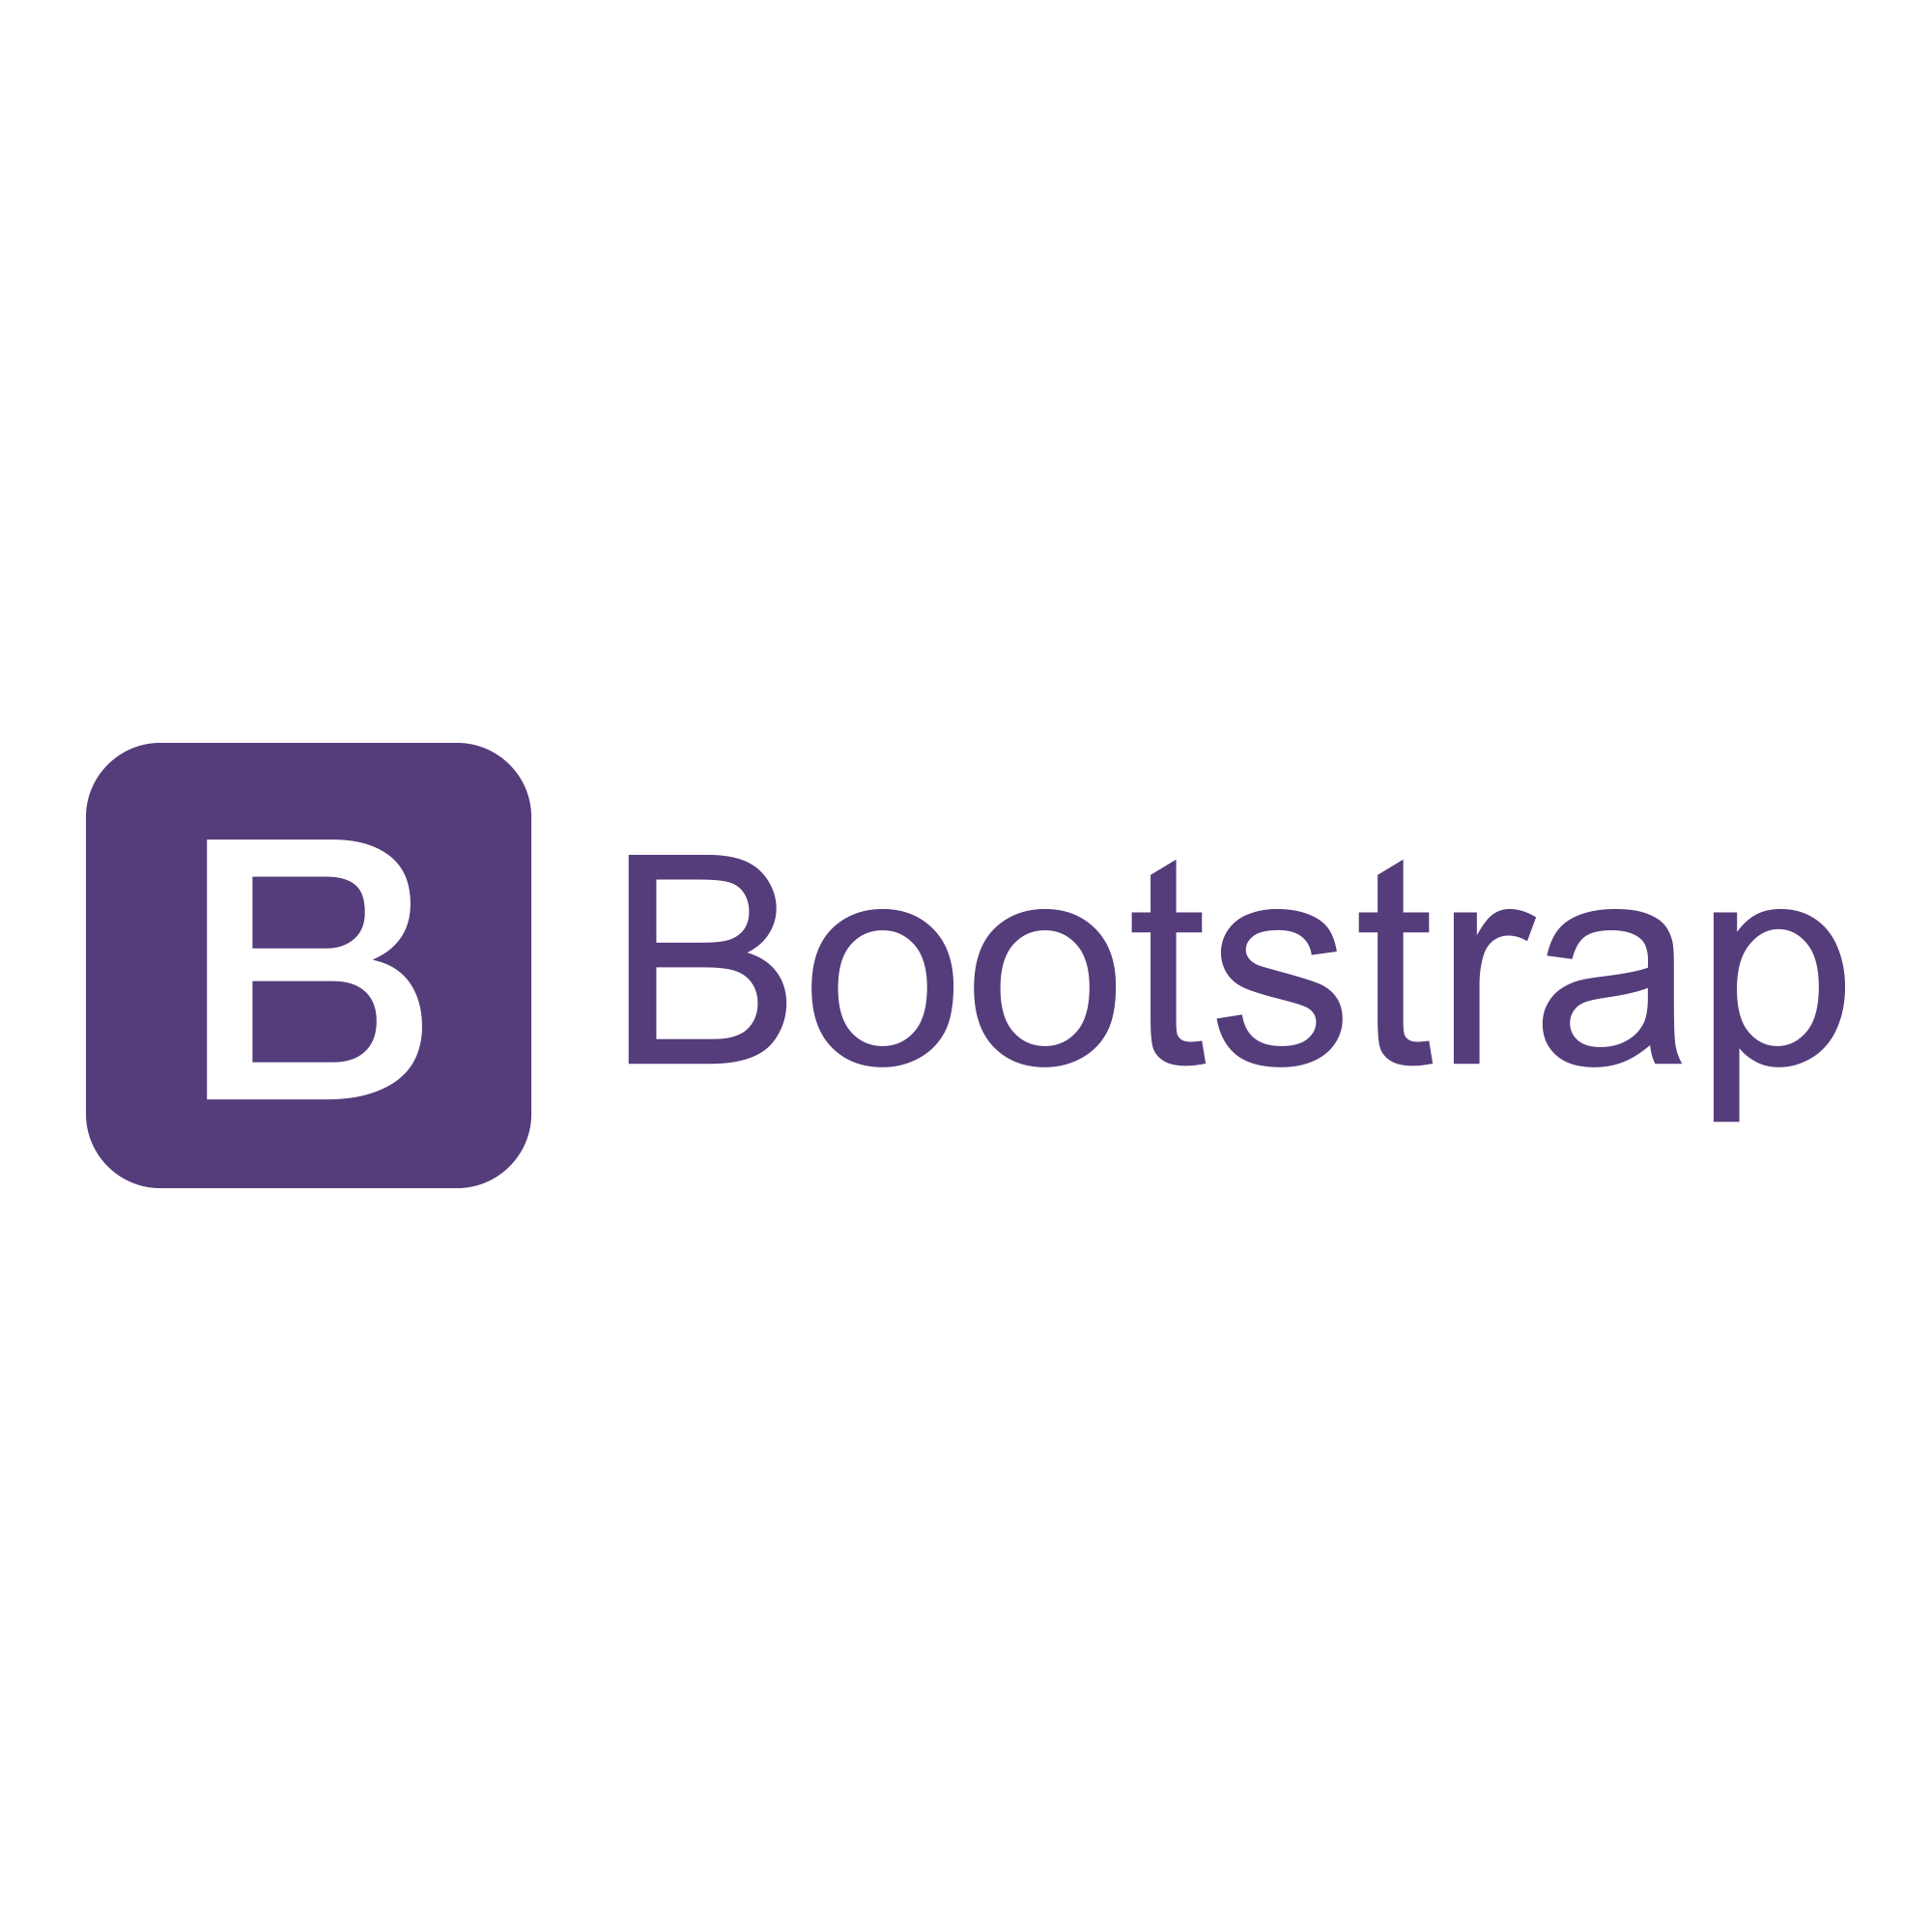 Jquery bootstrap. Bootstrap. Картинка Bootstrap. Бутстрап логотип. Логотип Bootstrap PNG.